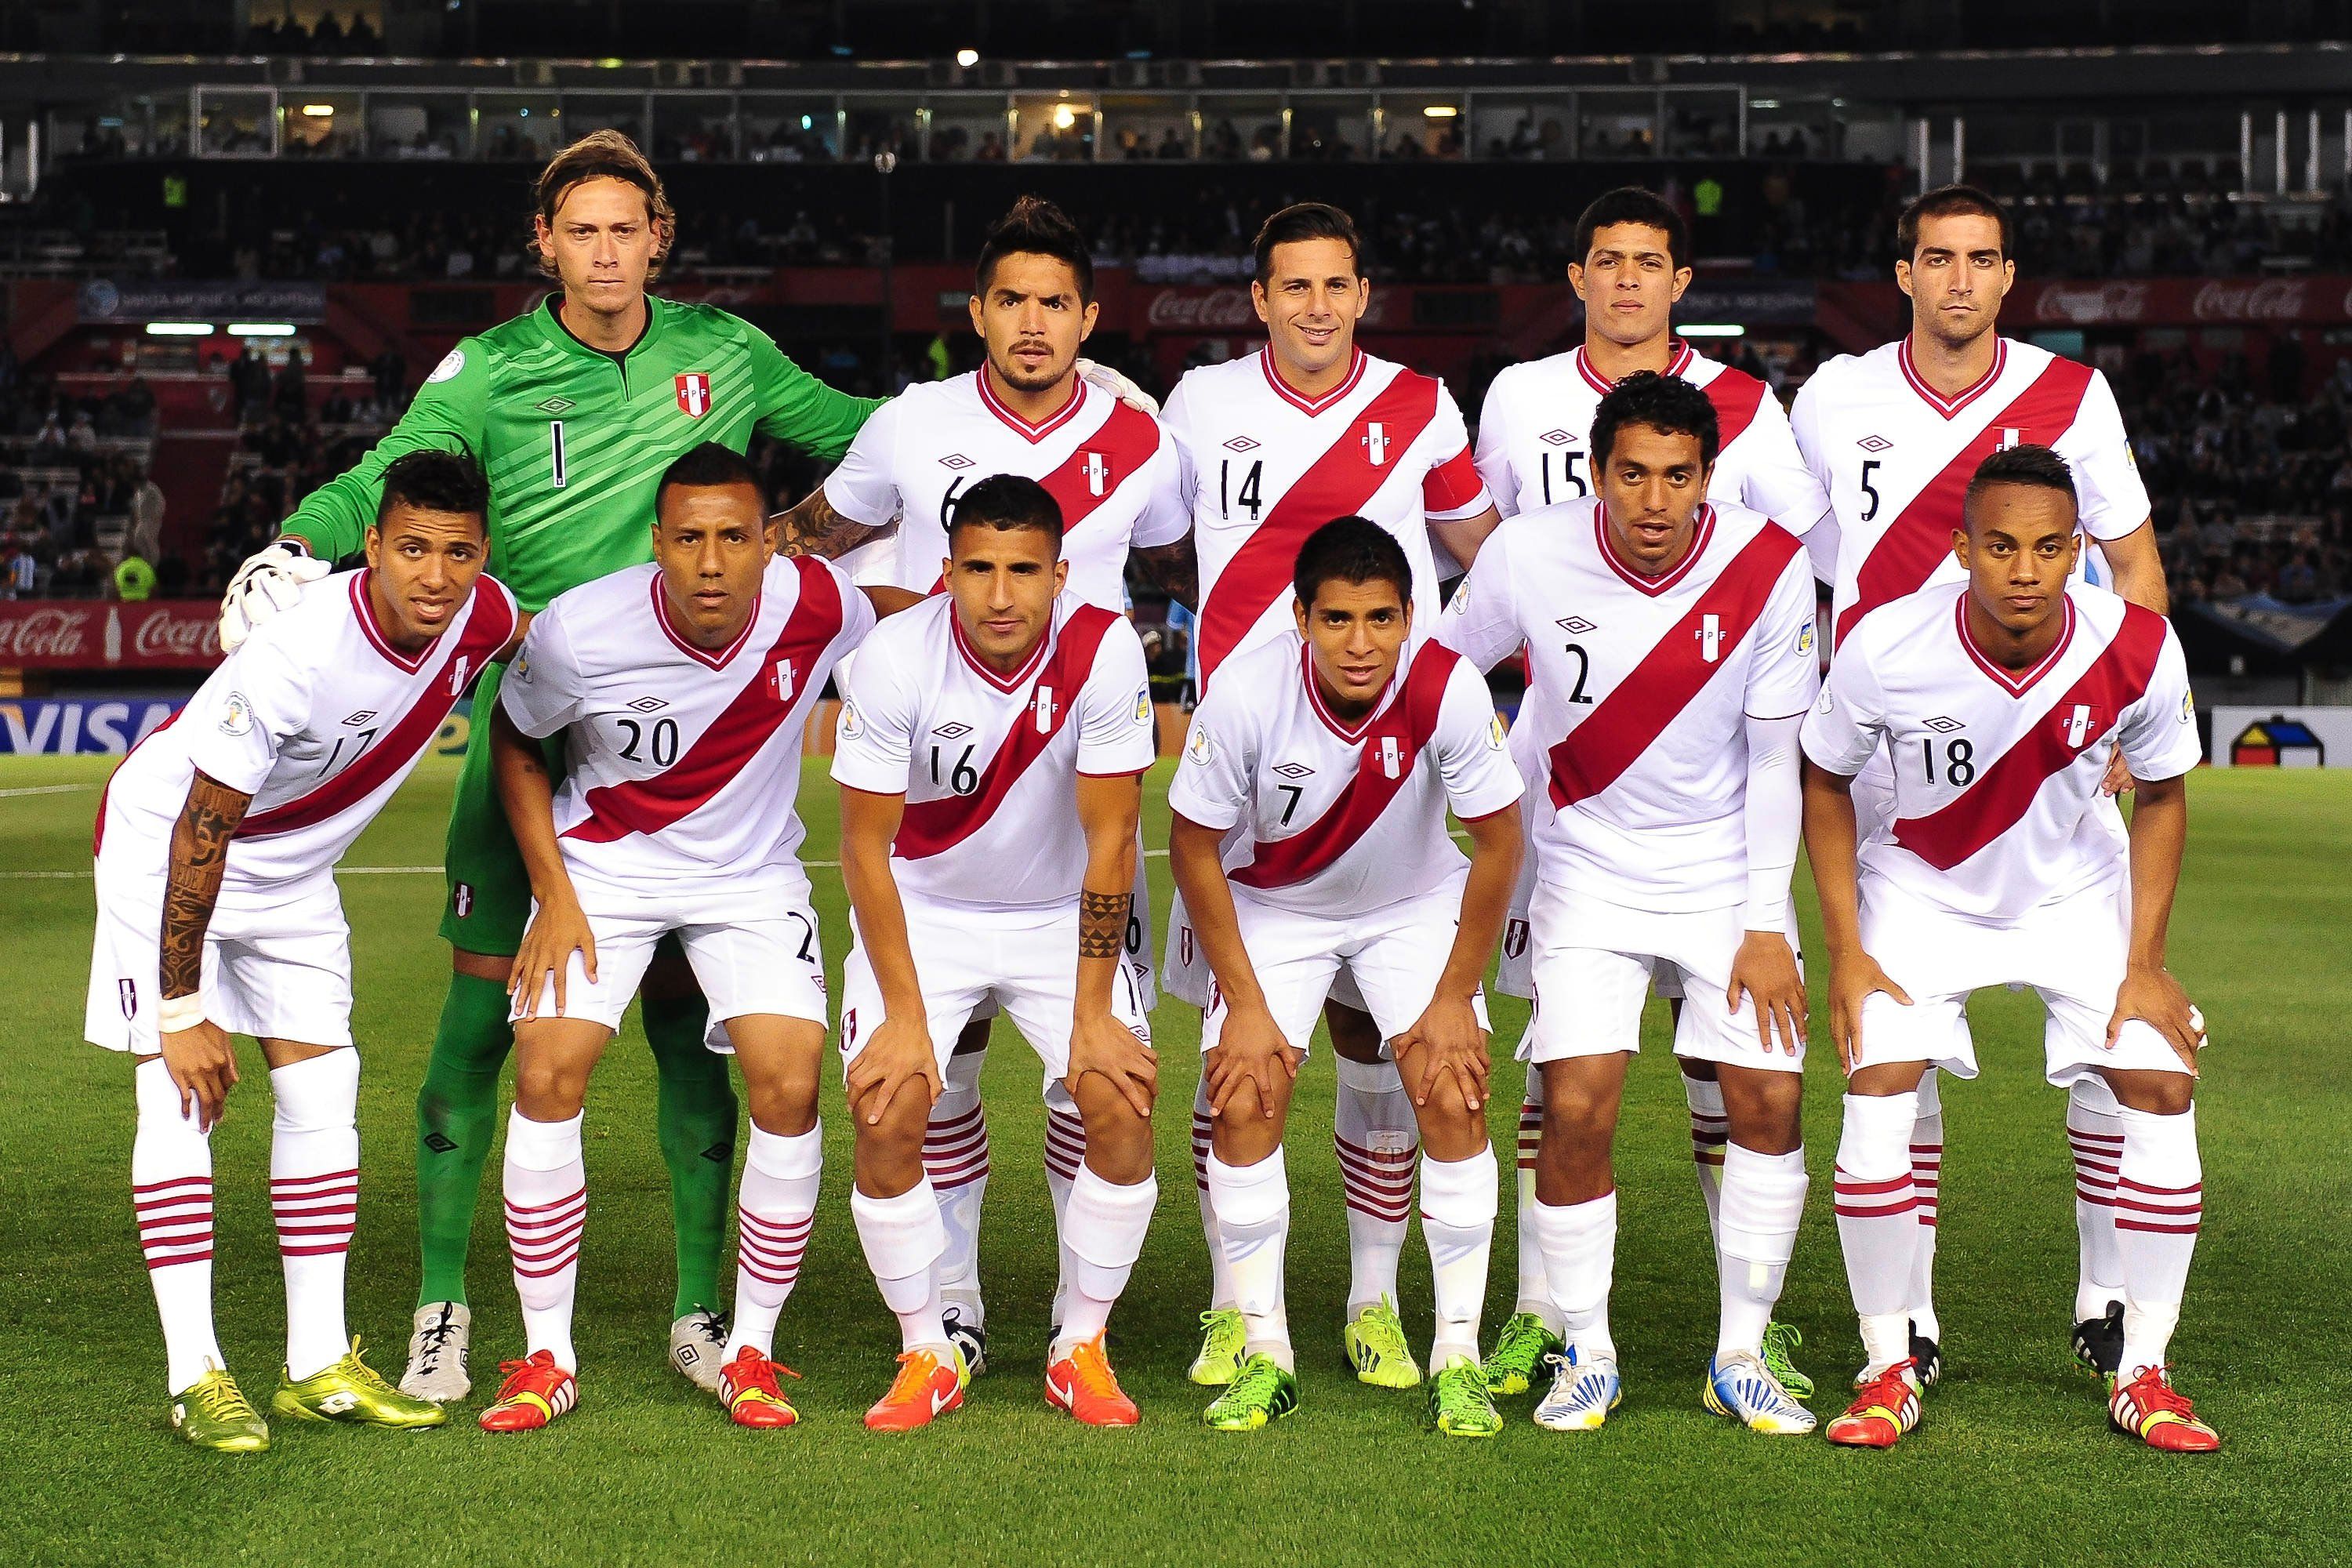 Peru National Team Wallpapers HD Wallpapers Download Free Images Wallpaper [wallpaper981.blogspot.com]